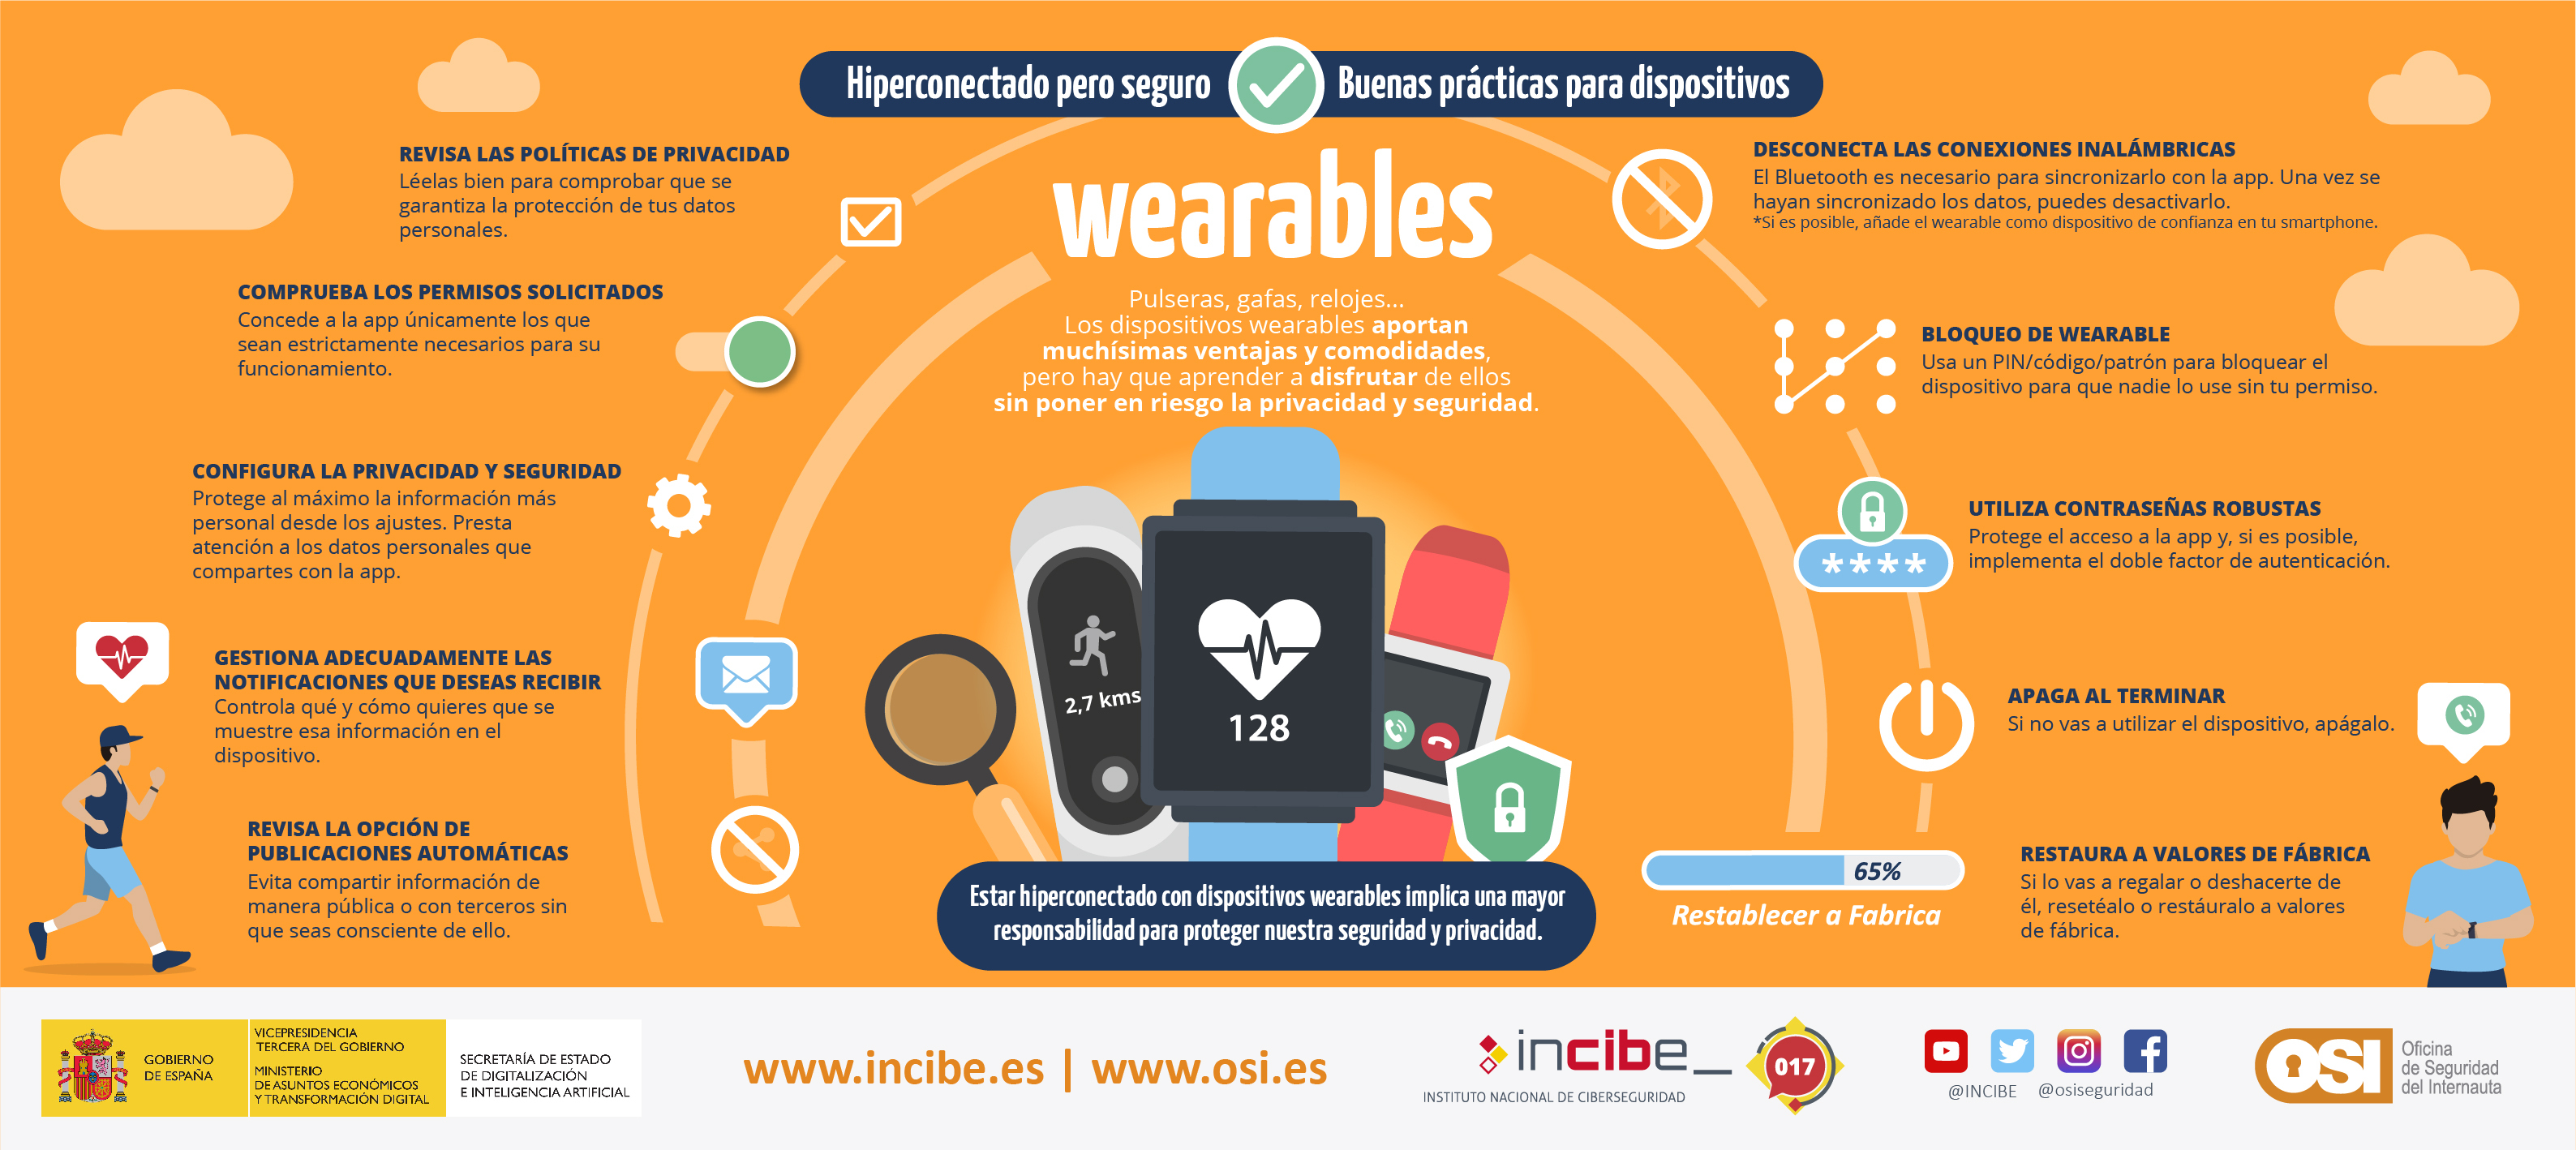 IoT - Hiperconectado pero seguro: buenas prácticas para dispositivos wearables